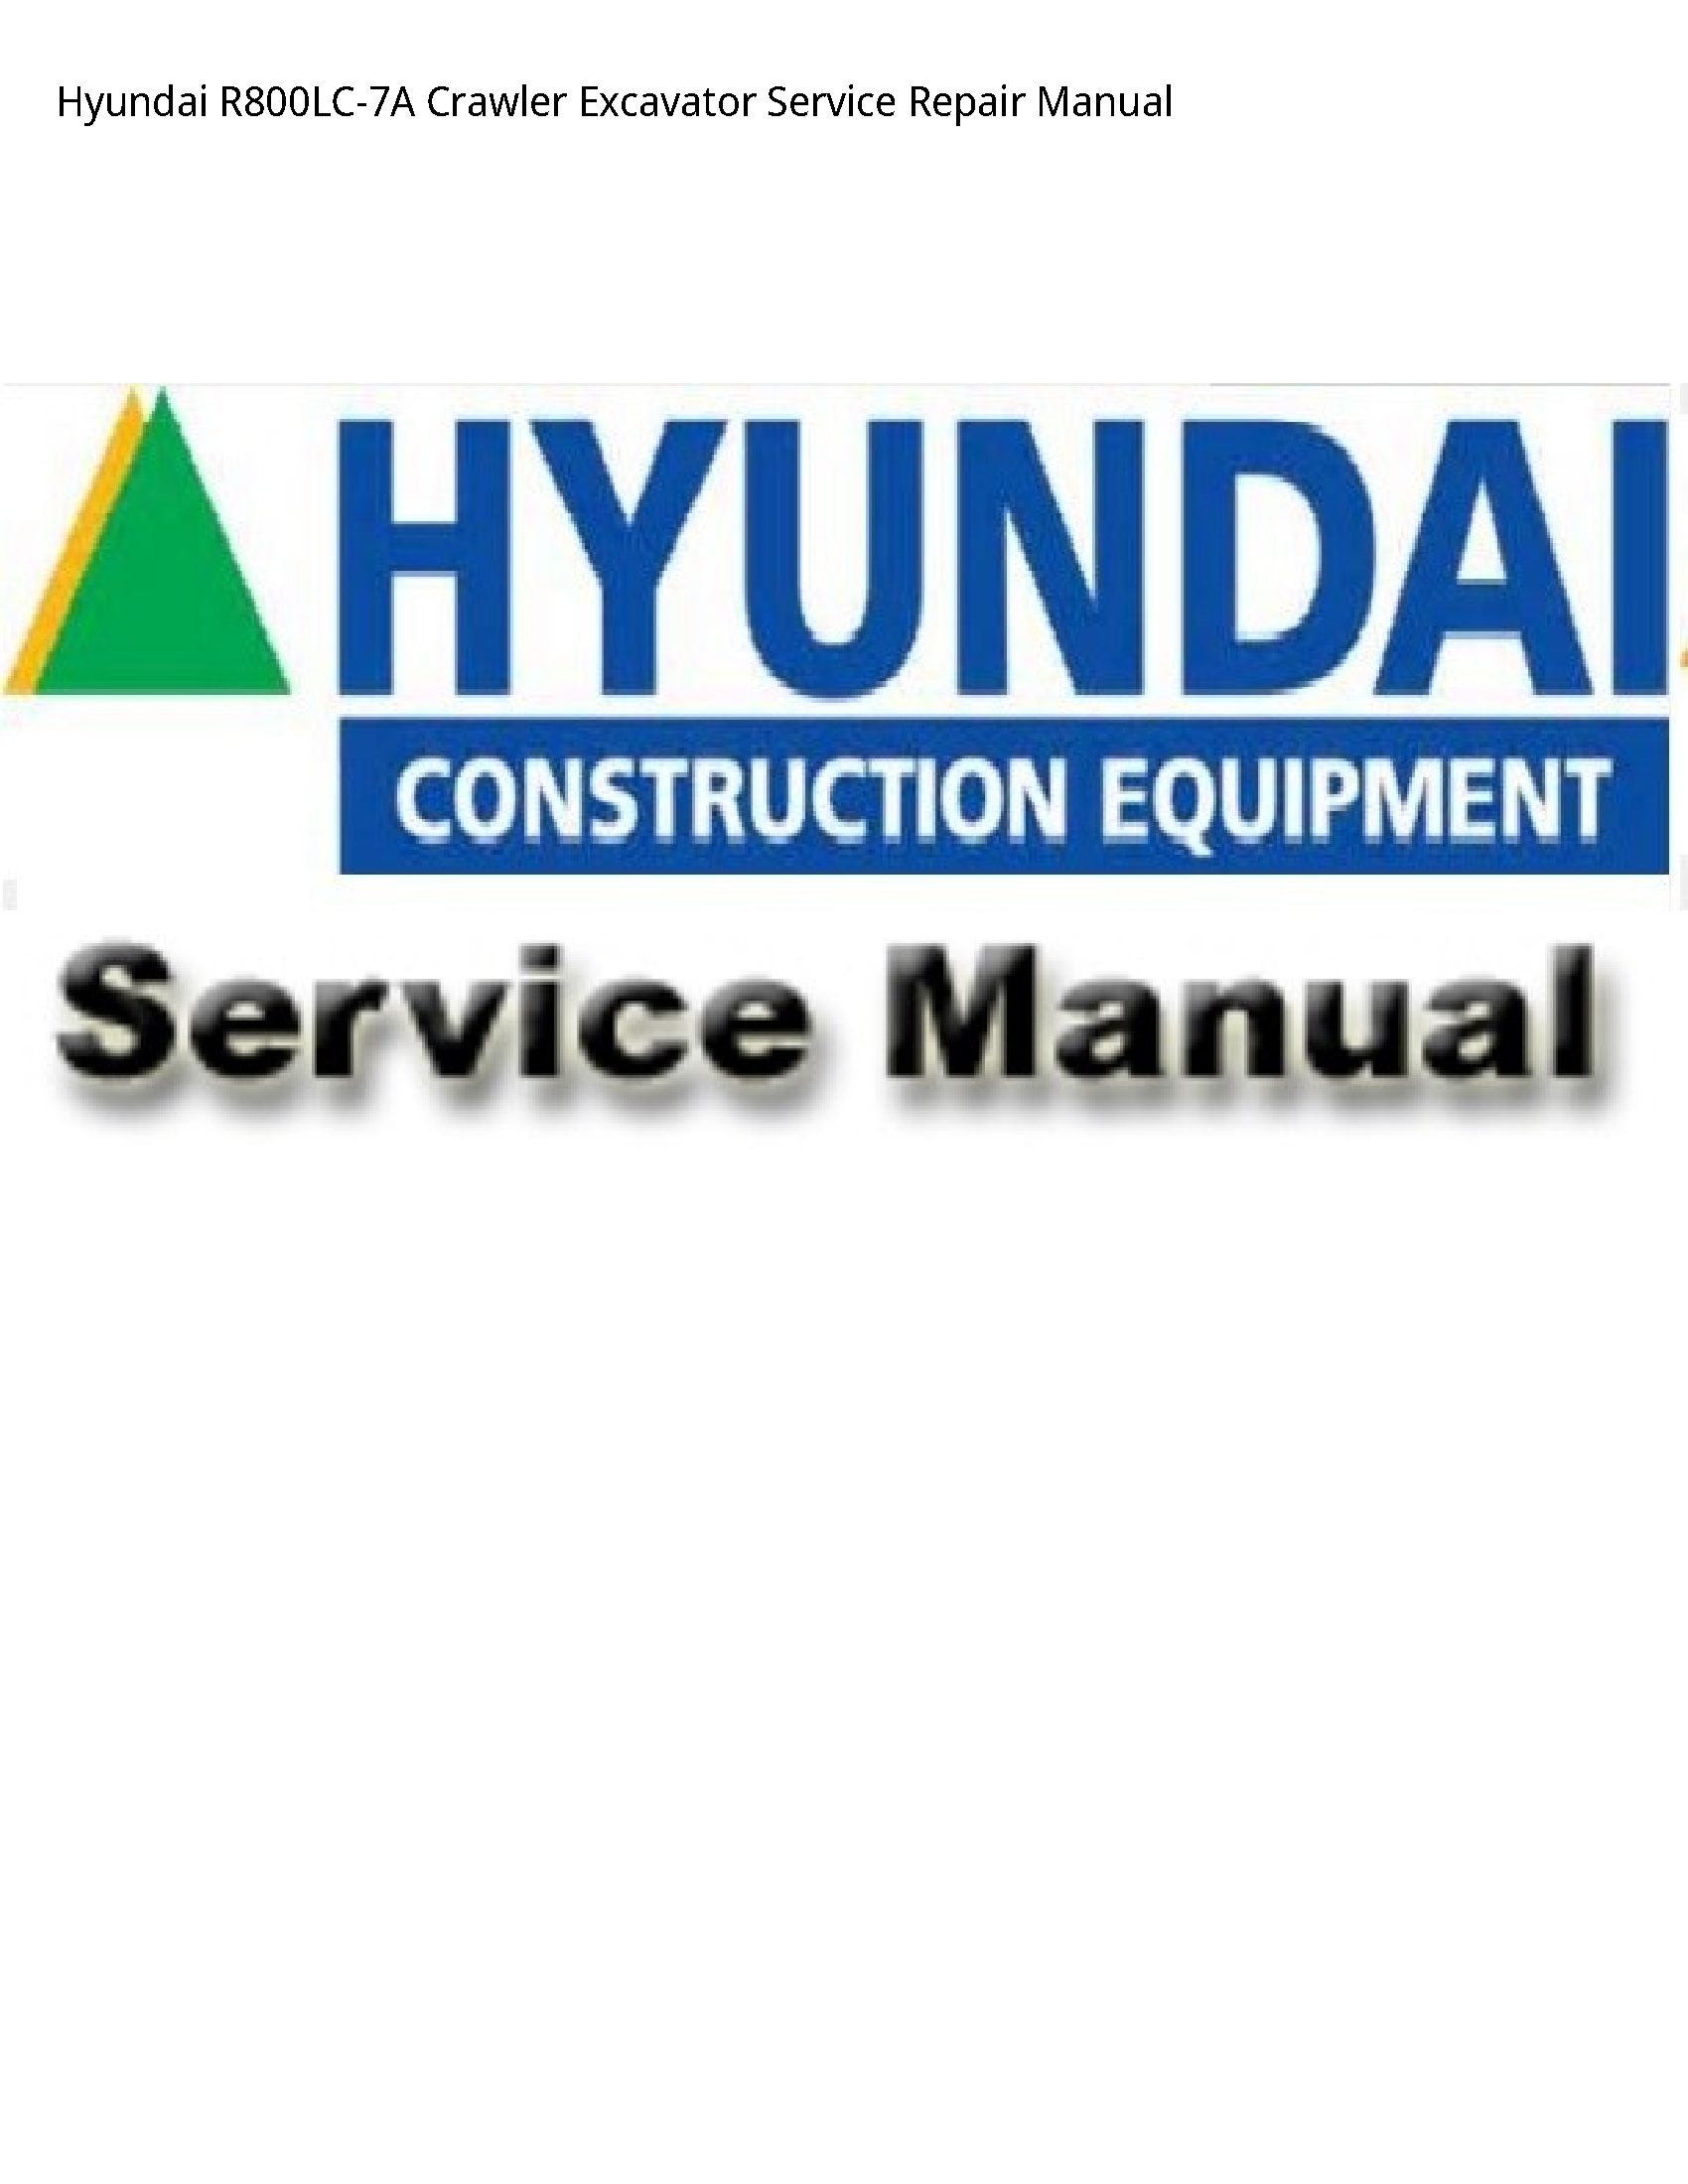 Hyundai R800LC-7A Crawler Excavator manual